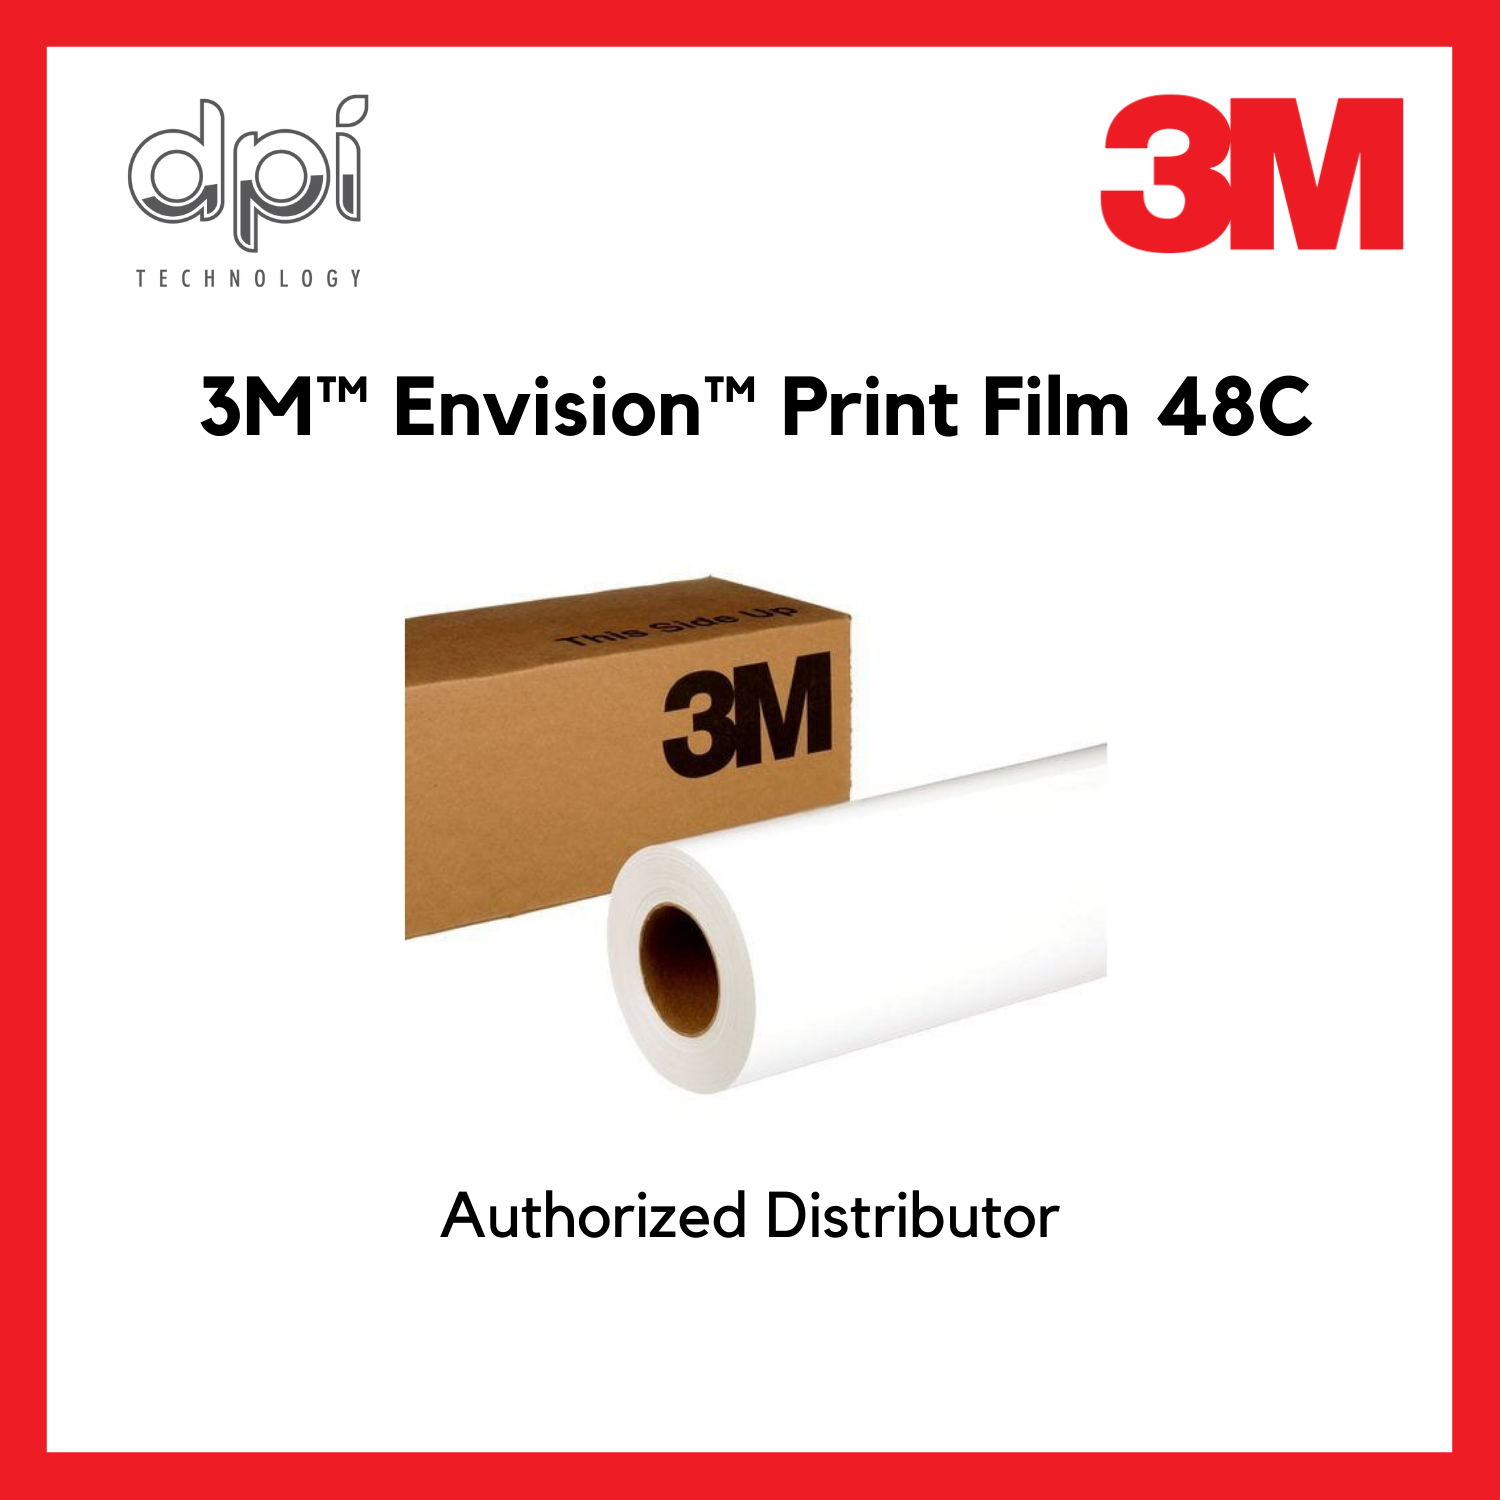 3M Envision Print Film 48C